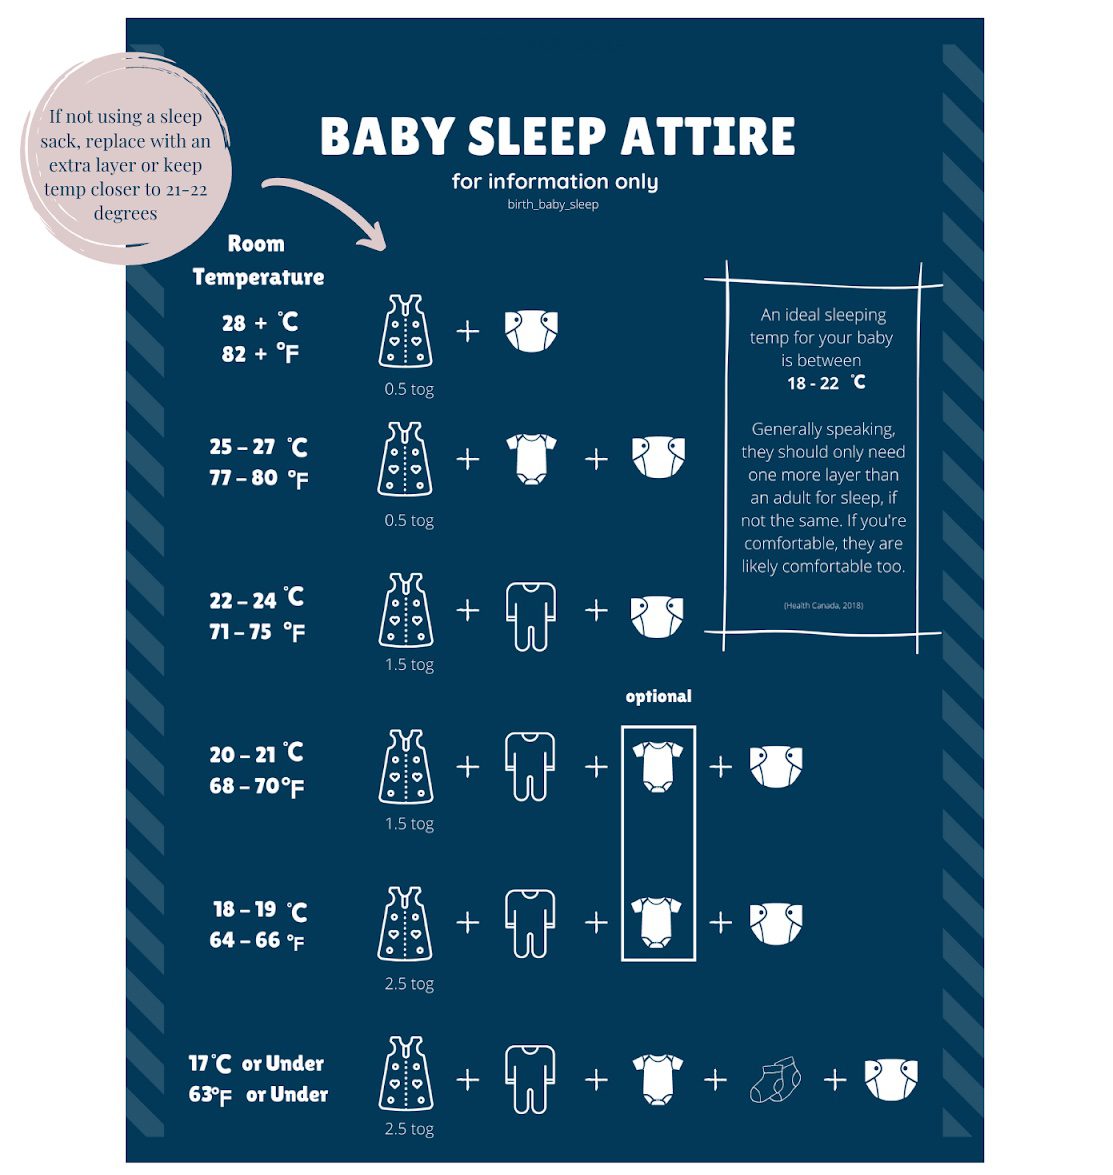 birth, baby, sleep - baby sleep attire 